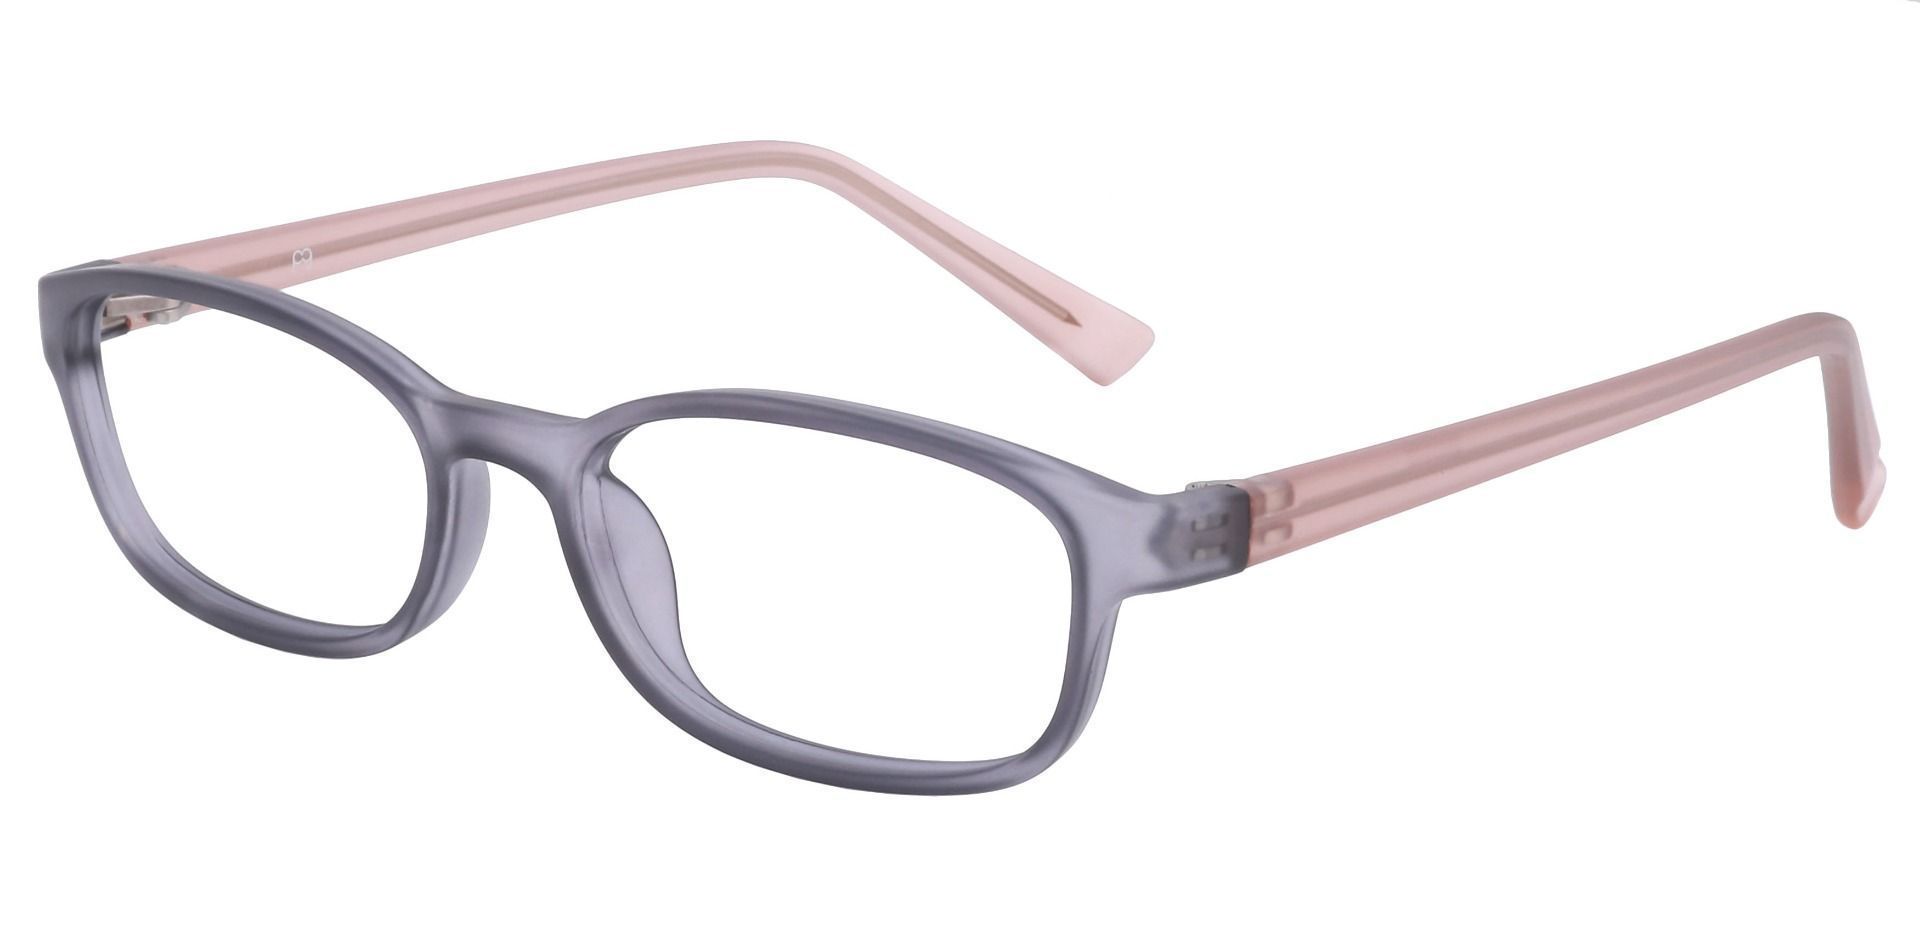 Kia Oval Single Vision Glasses - Grey Matte